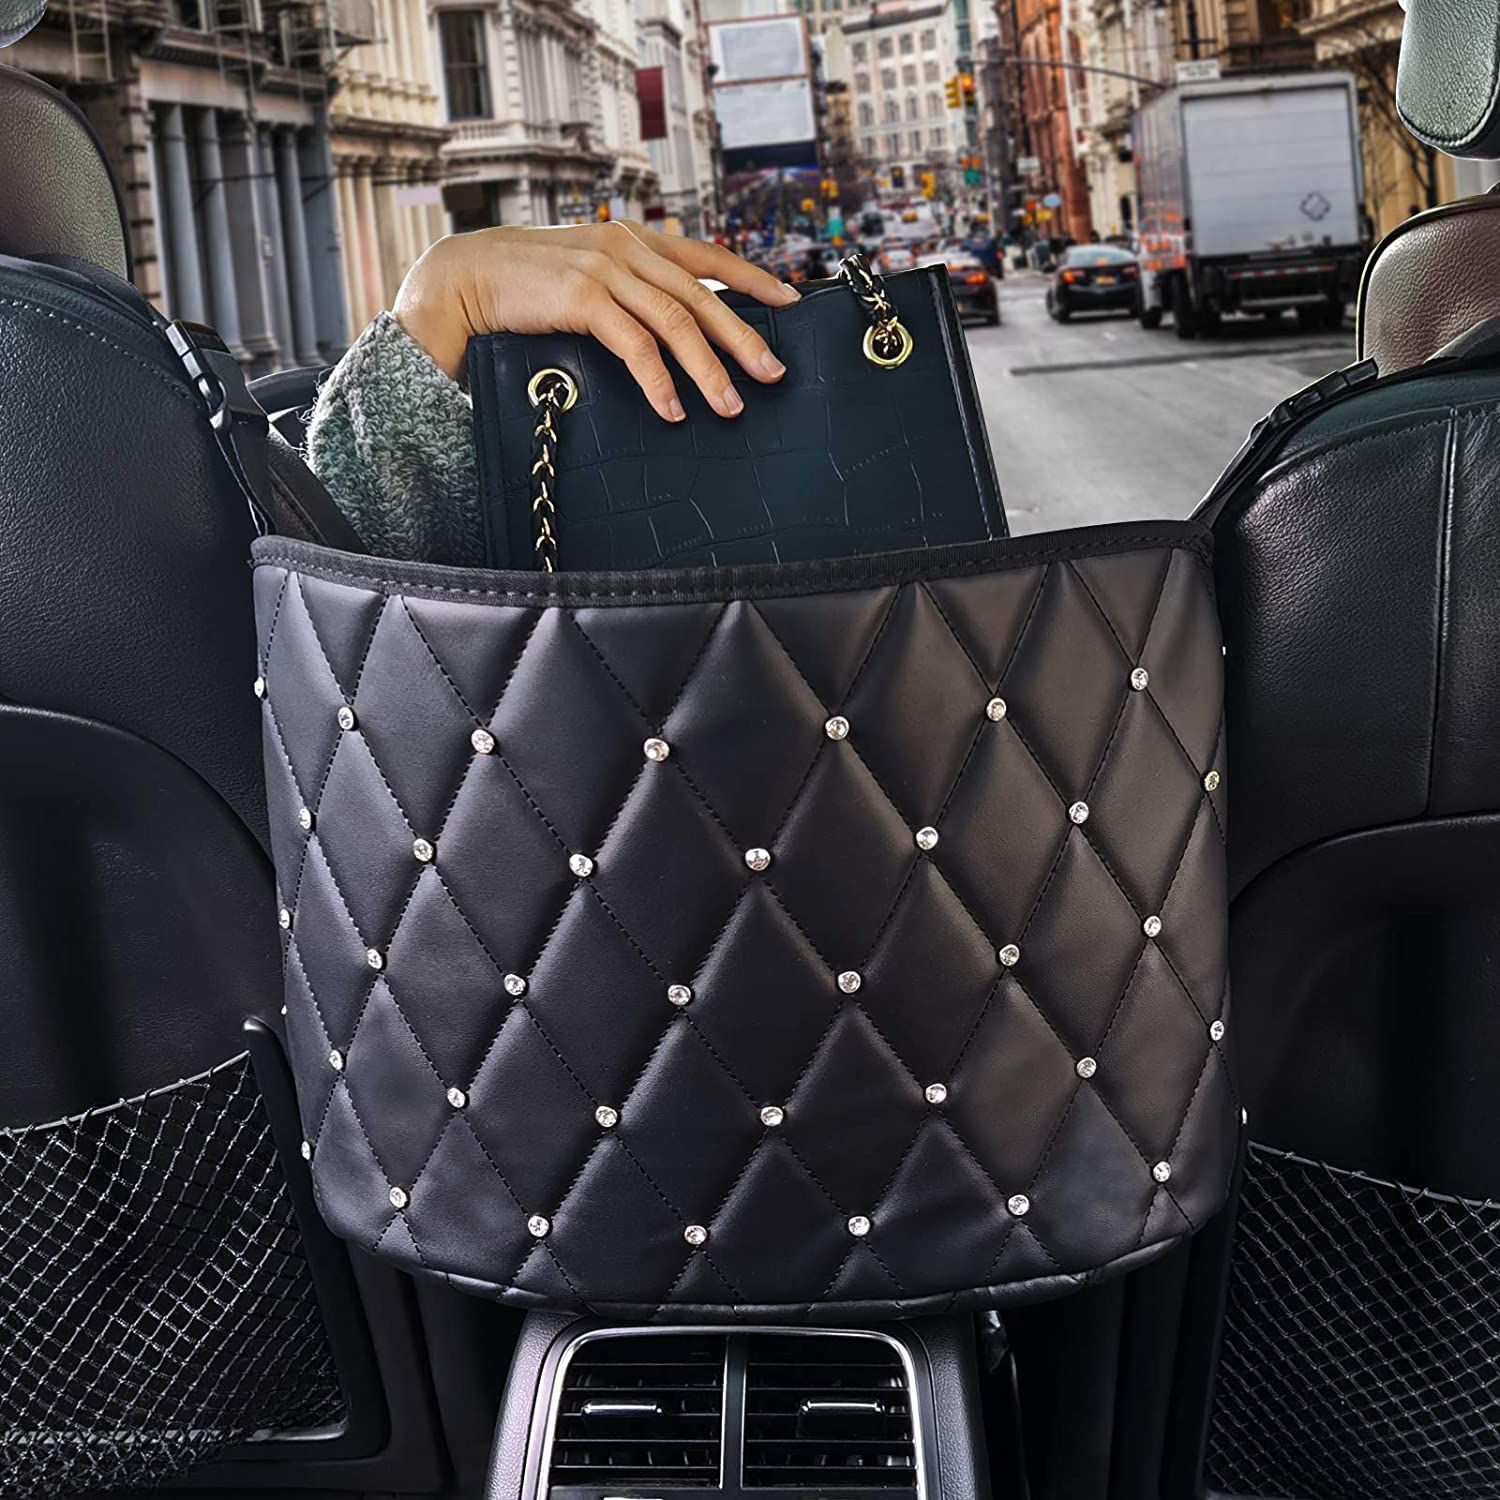 LivTee Car Seat Headrest Hook, Auto Seat Hook Hangers Storage Organizer  Interior Accessories for Purse Coats Umbrellas Grocery Bags Handbag, 4-Pack  [Video] [Video]